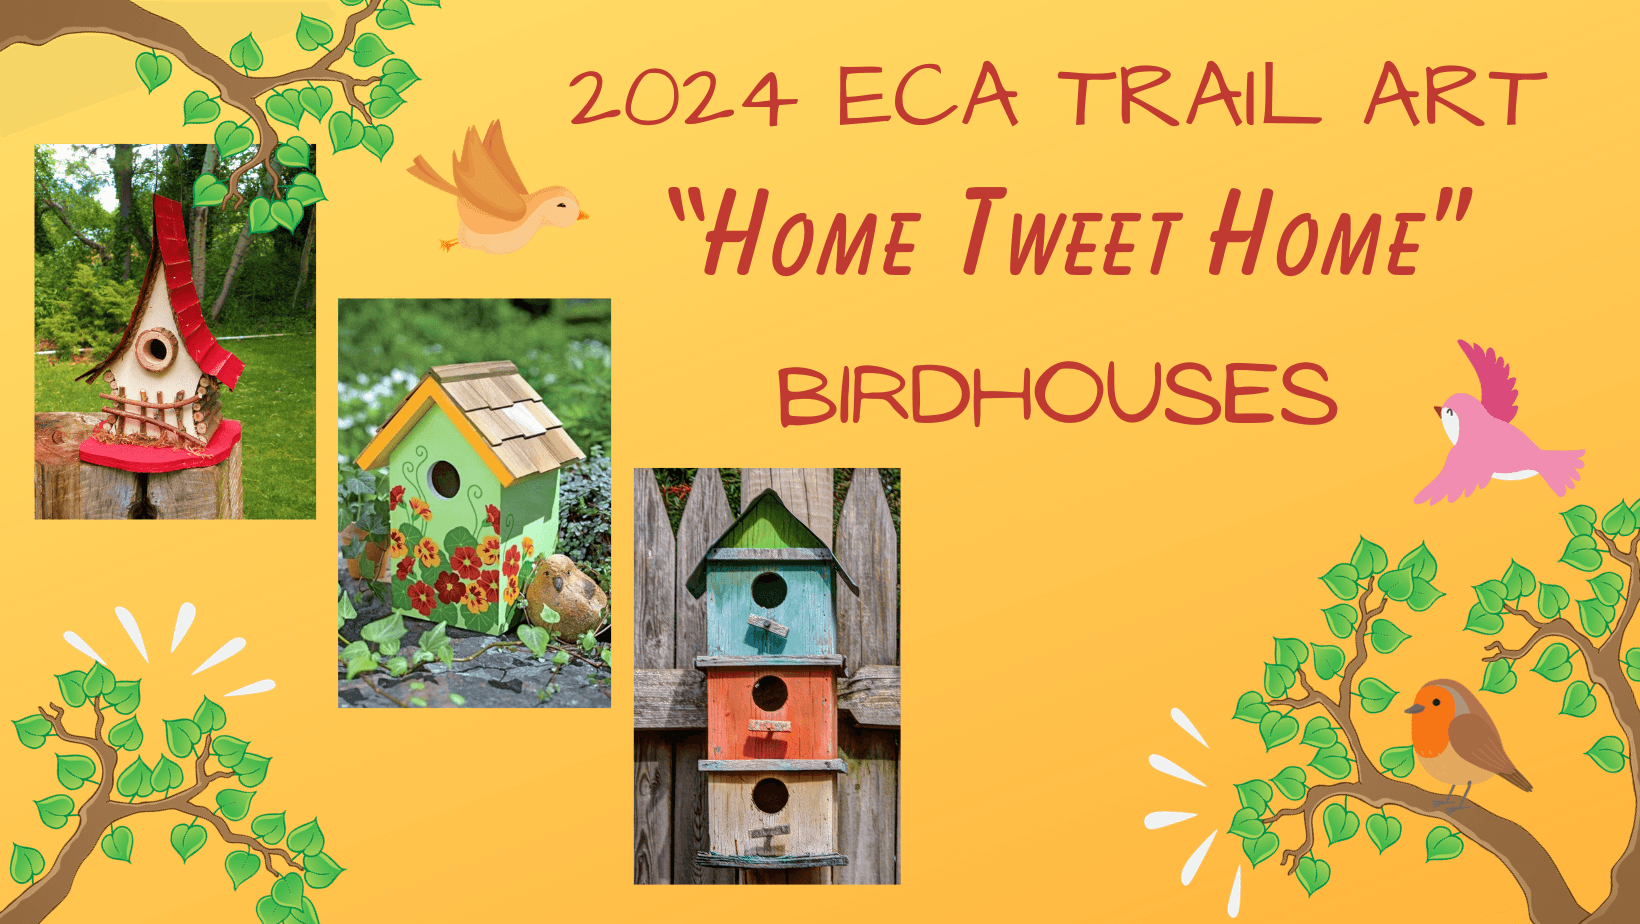 2024 ECA TRAIL ART "Home Tweet Home" Birdhouses